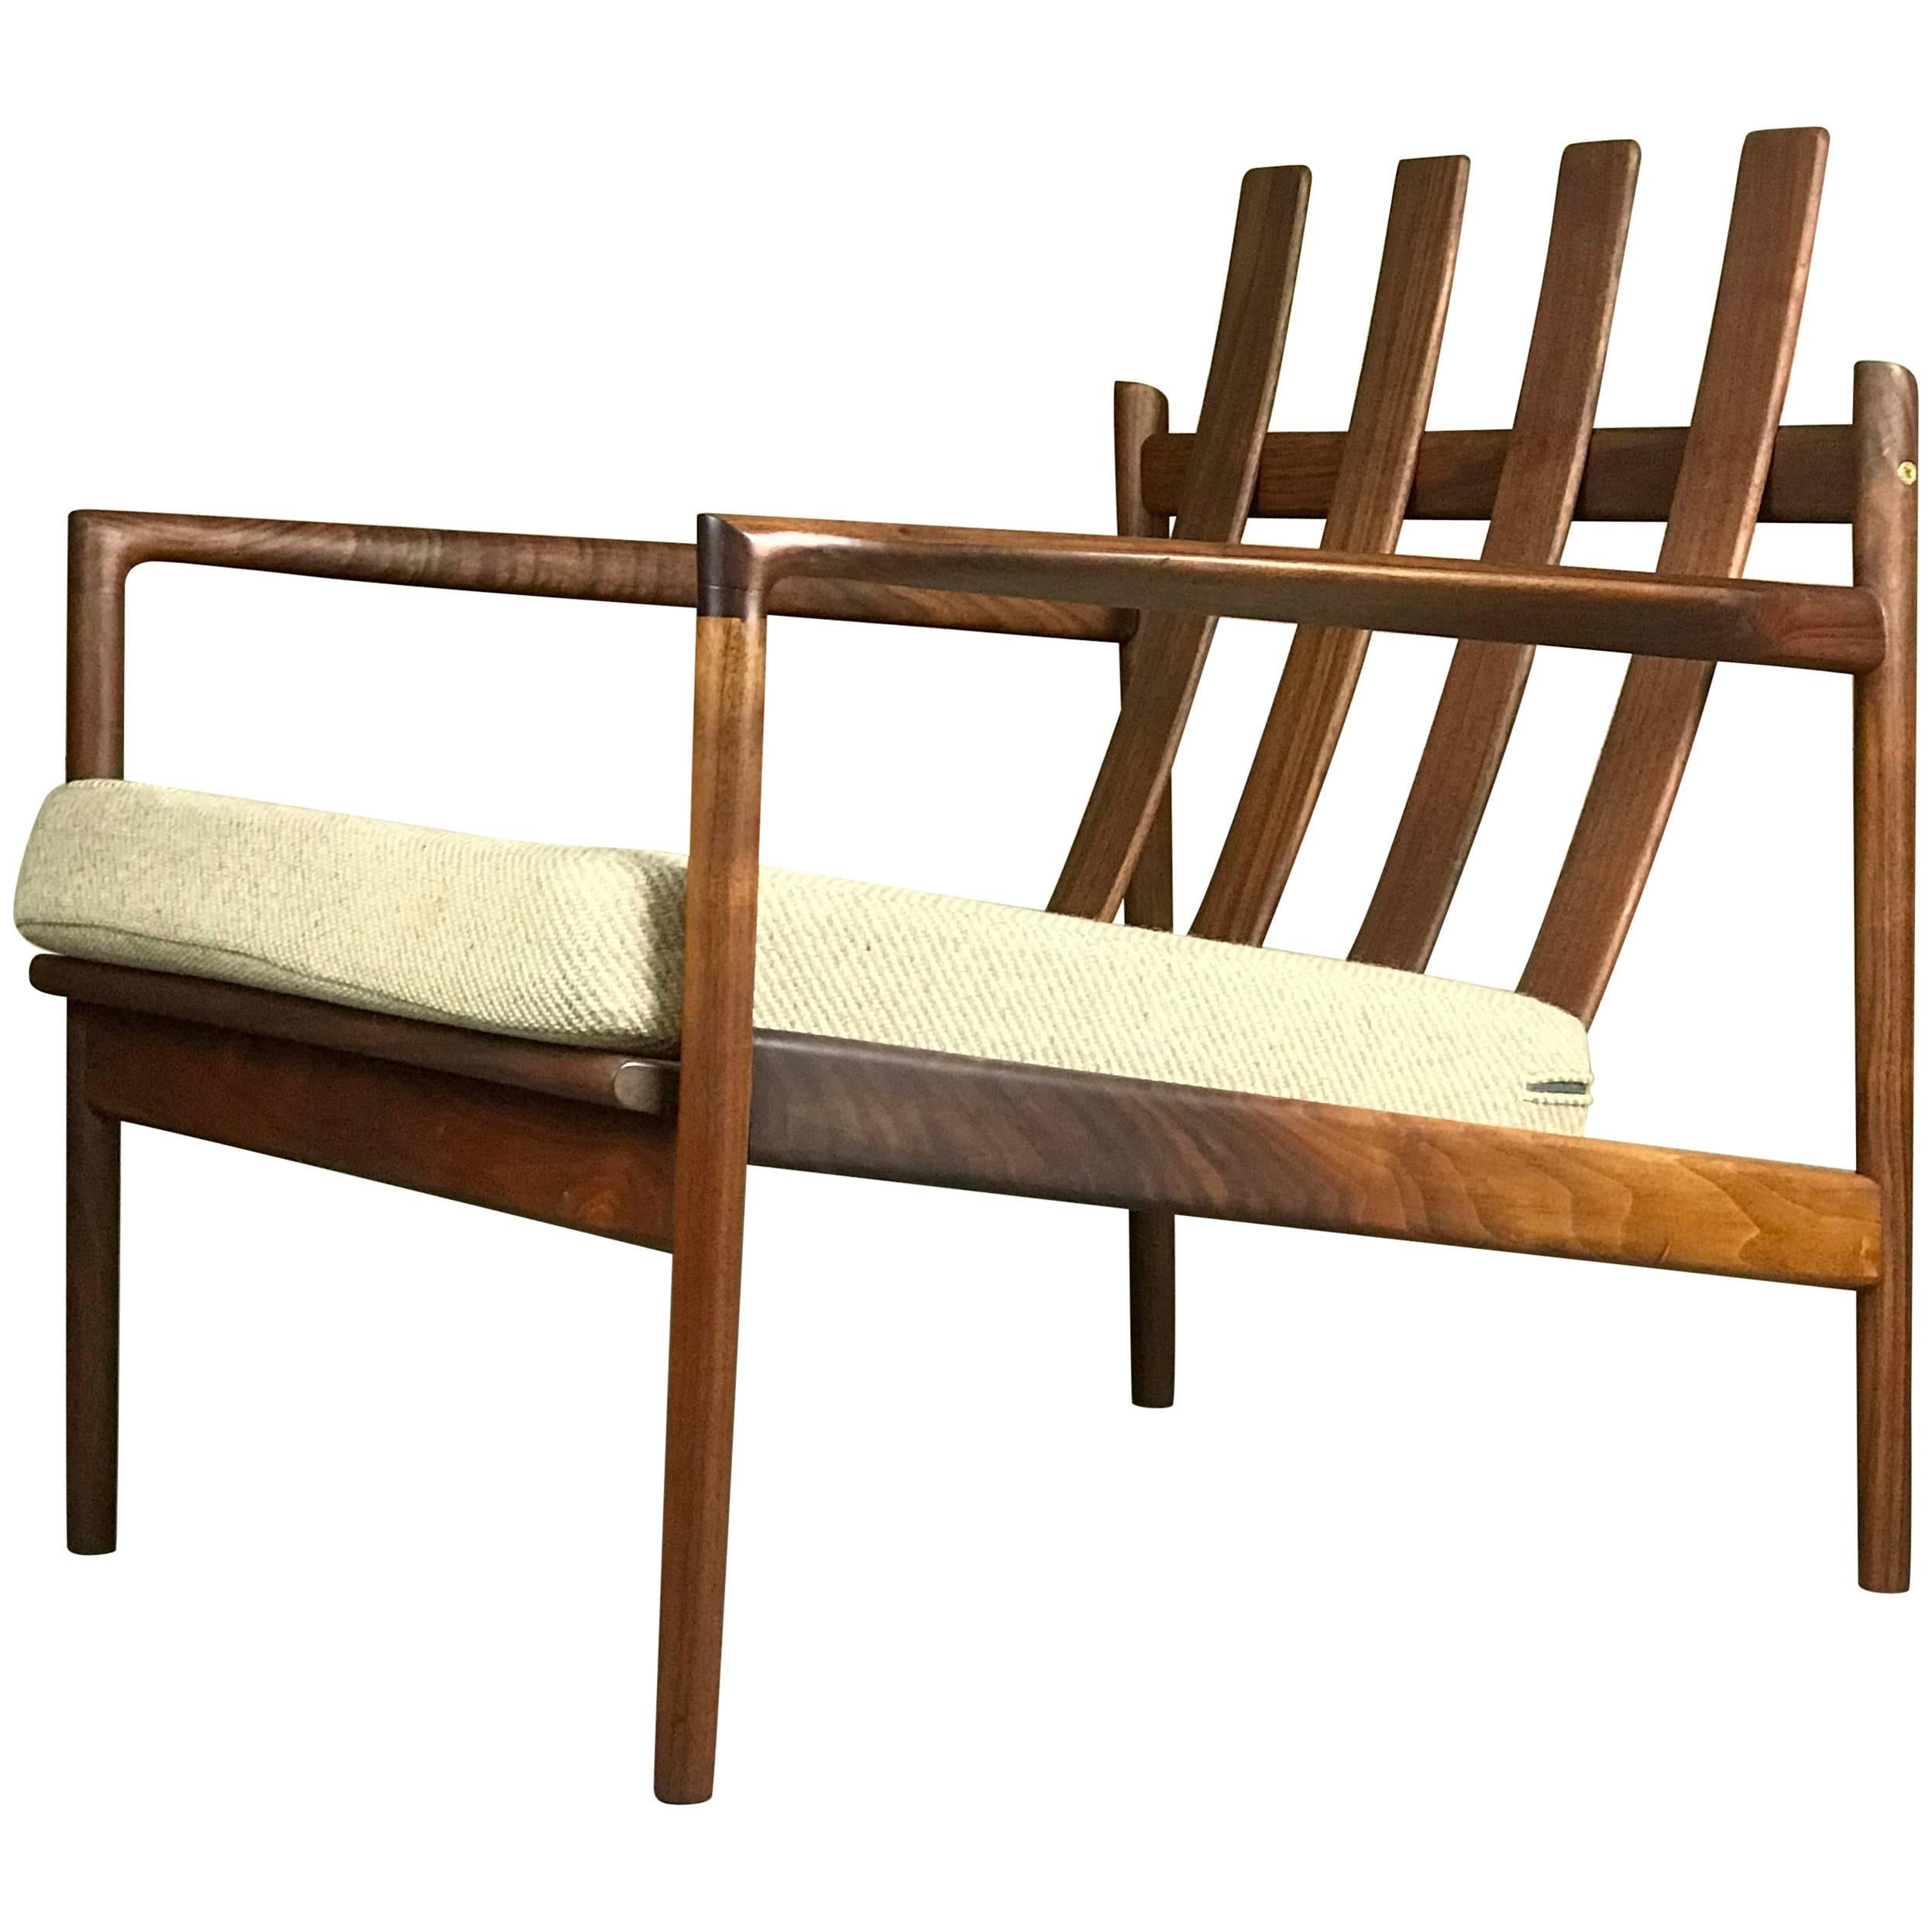 Early Danish Modern Lounge Chair in Teak by Ib Kofod Larsen for Selig: Restored 